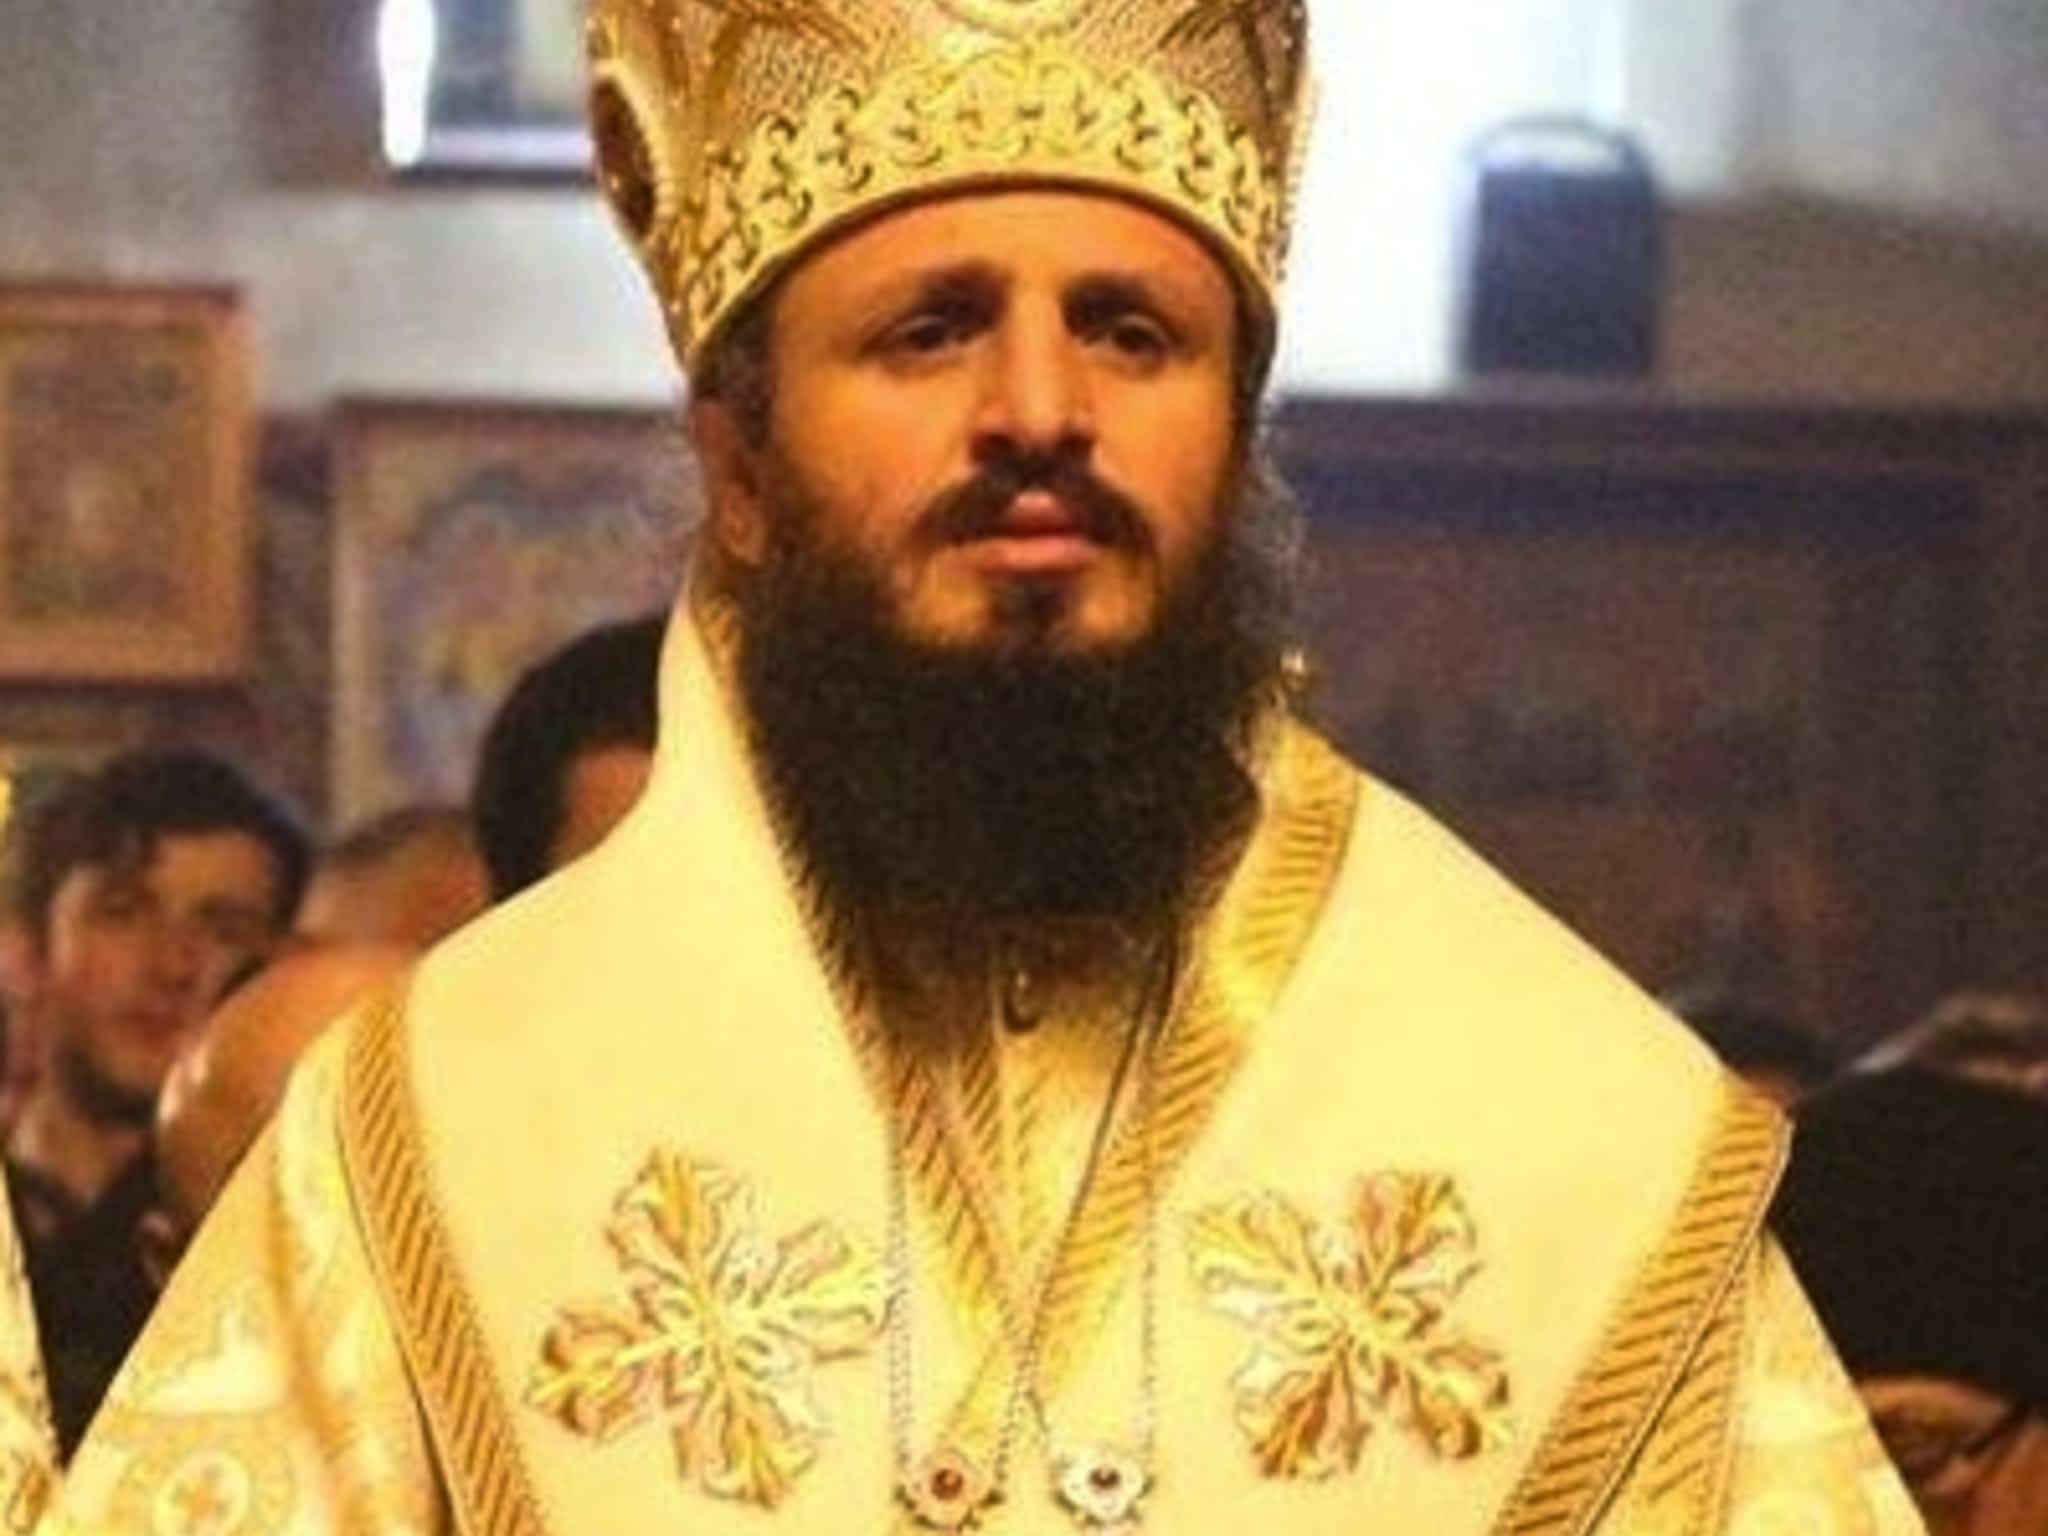 photo Georgian Orthodox Church